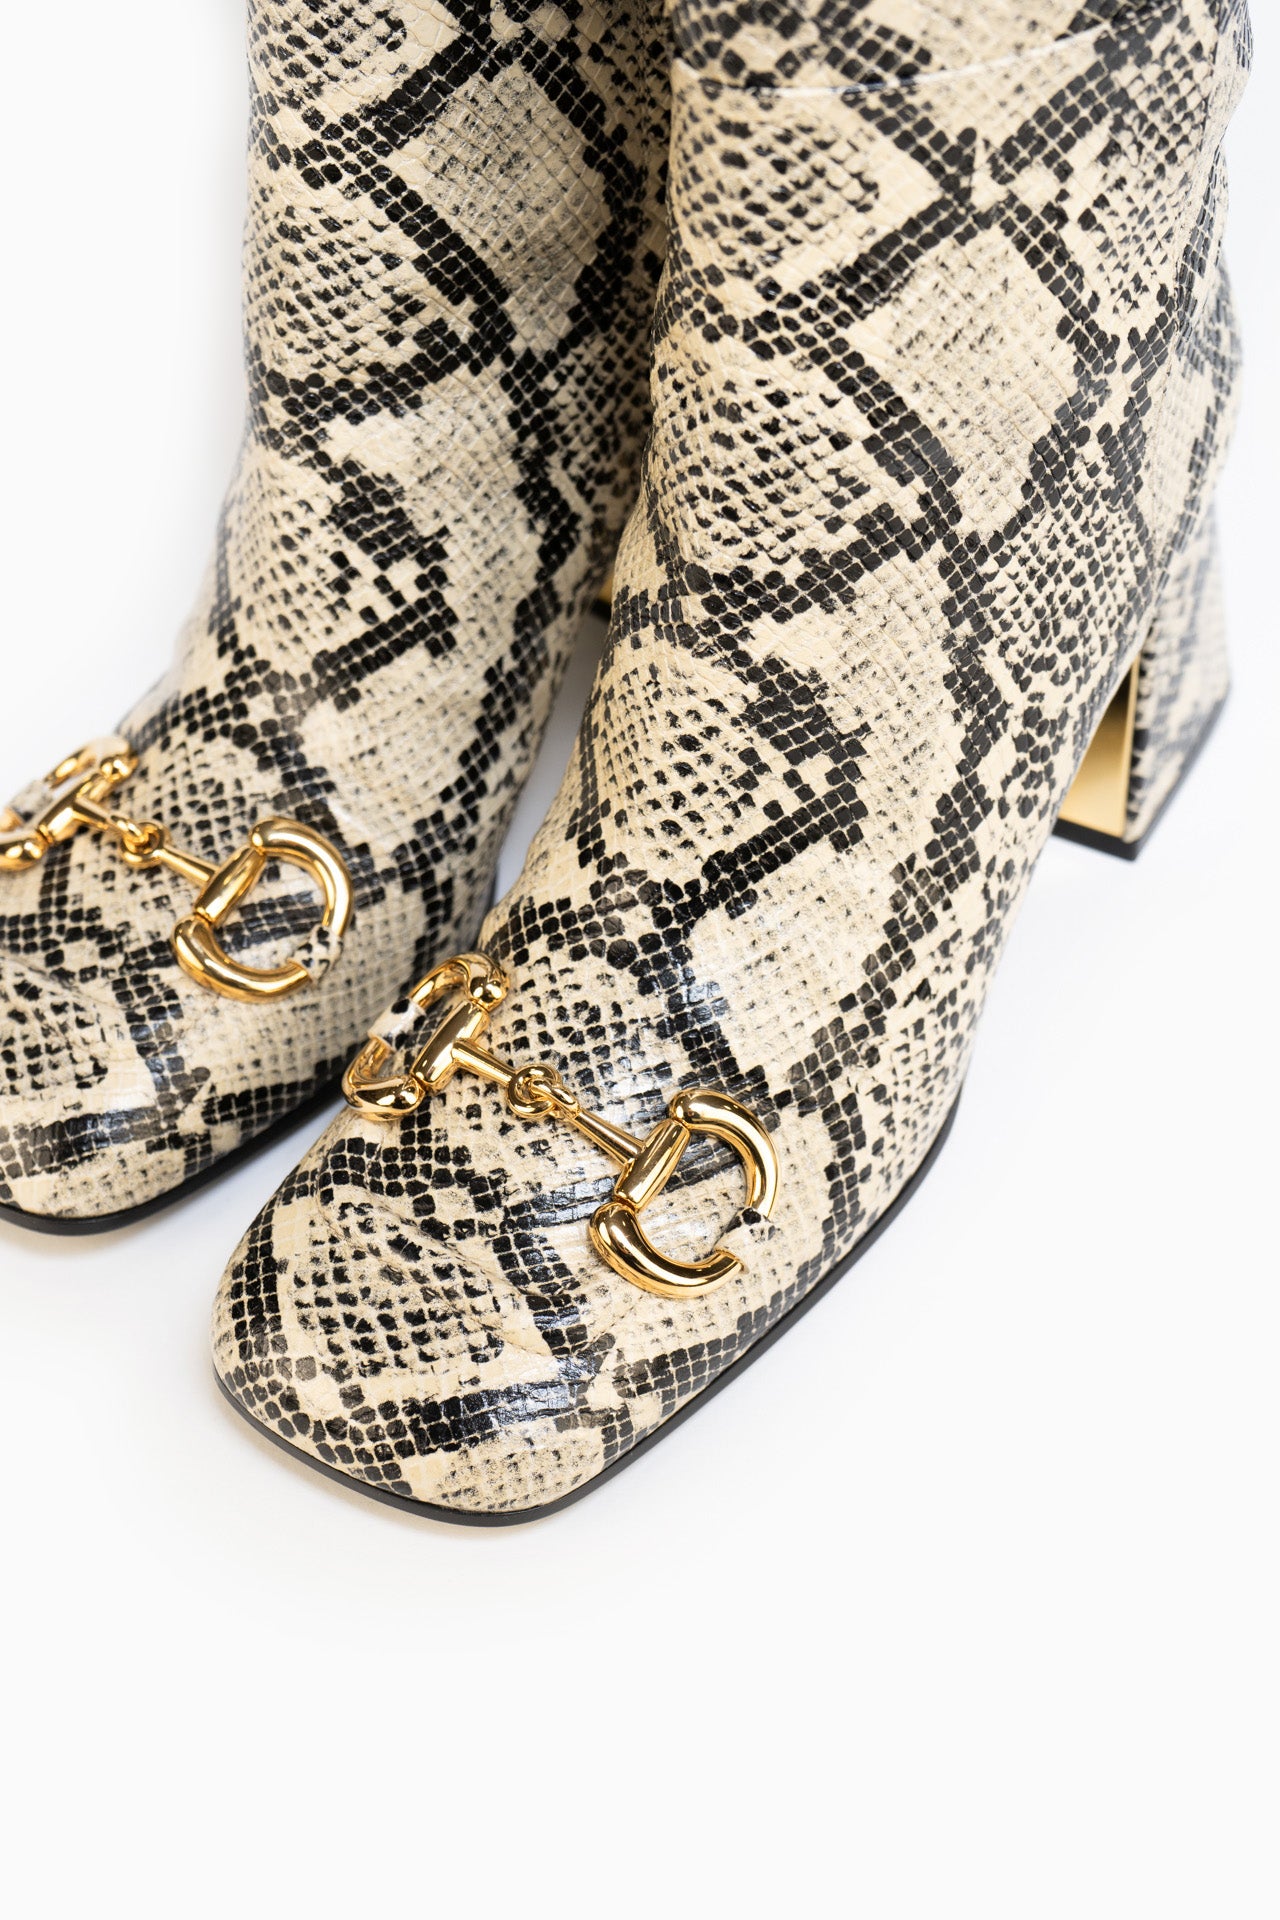 Gucci Horsebit Snake Print Knee-high Boots - Size 38